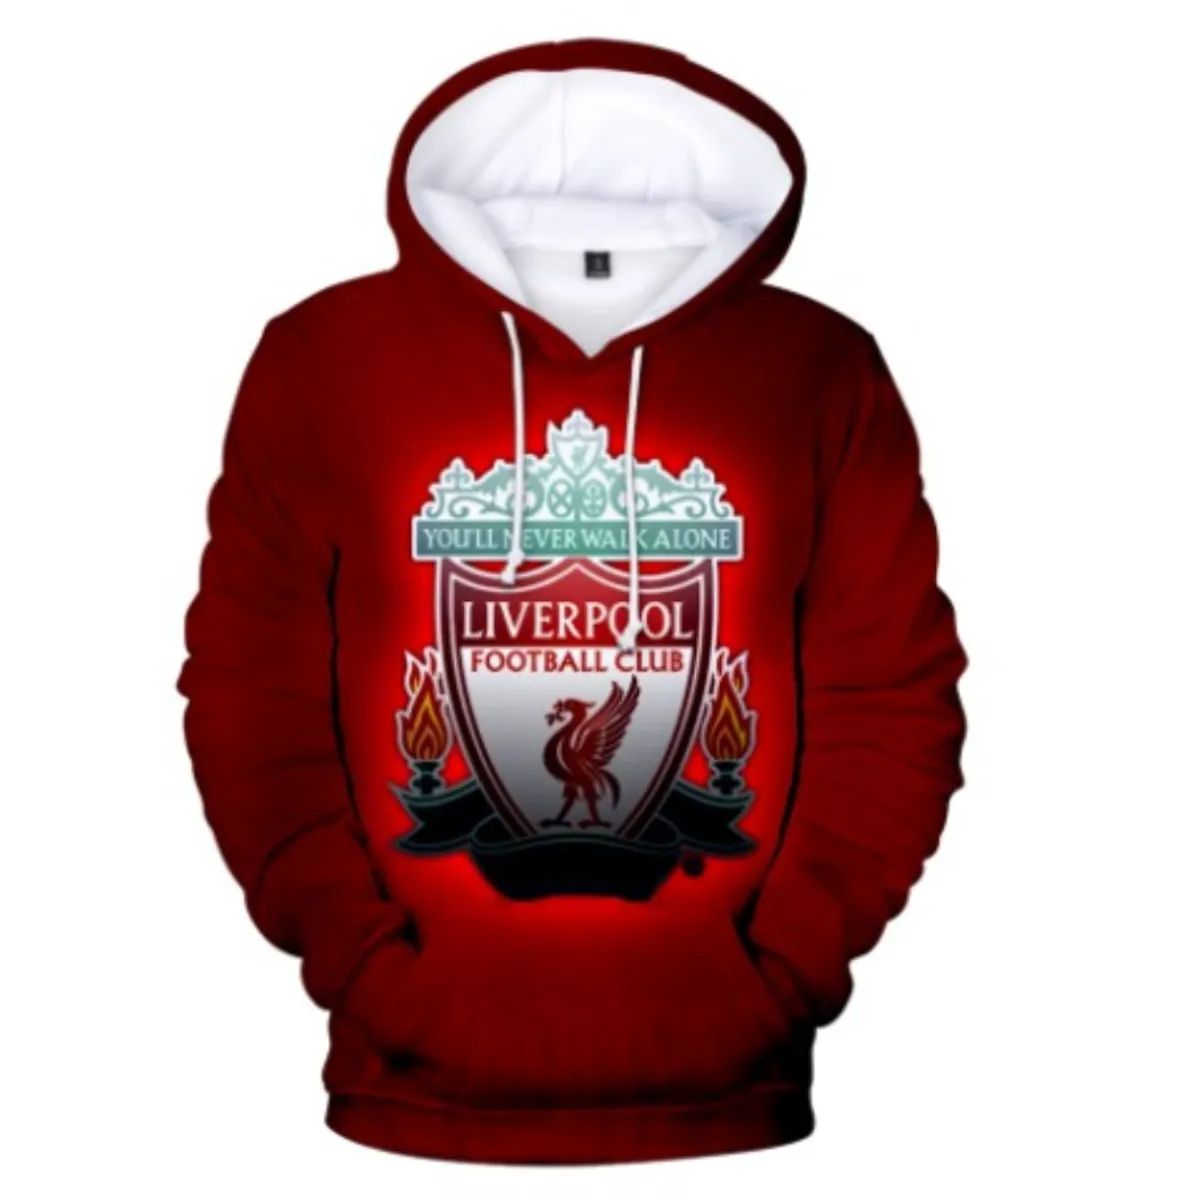 Liverpool F.C. Premier League Team uniform 3D Winer Suit Hoodies Sportswear Hooded Youthful Women/Men The hooded | Lazada